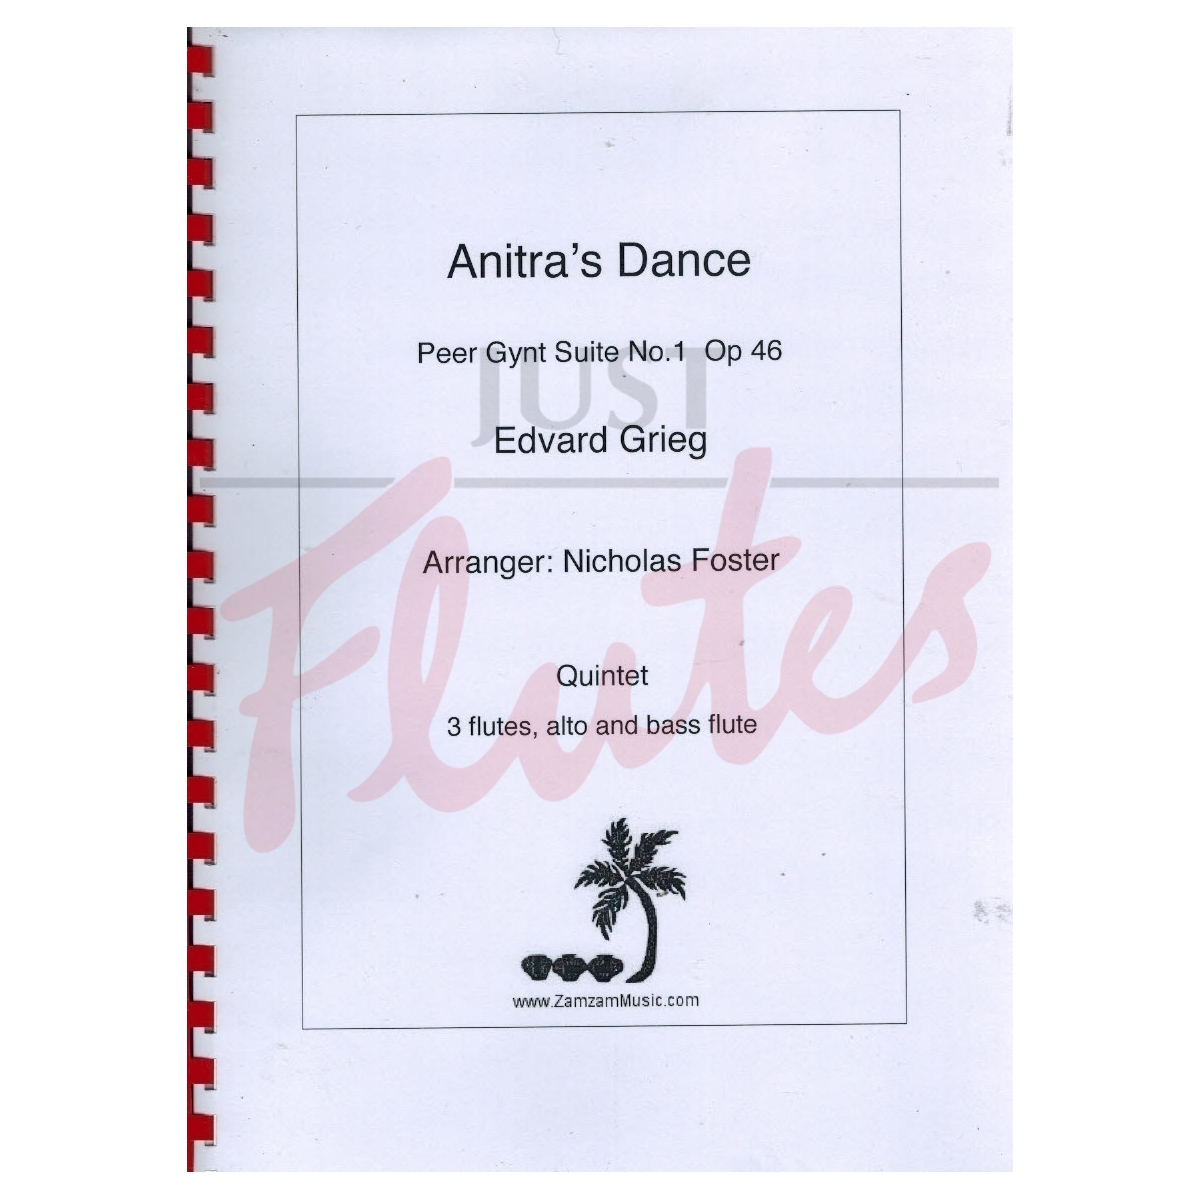 Peer Gynt Suite No1: Anitra's Dance                   